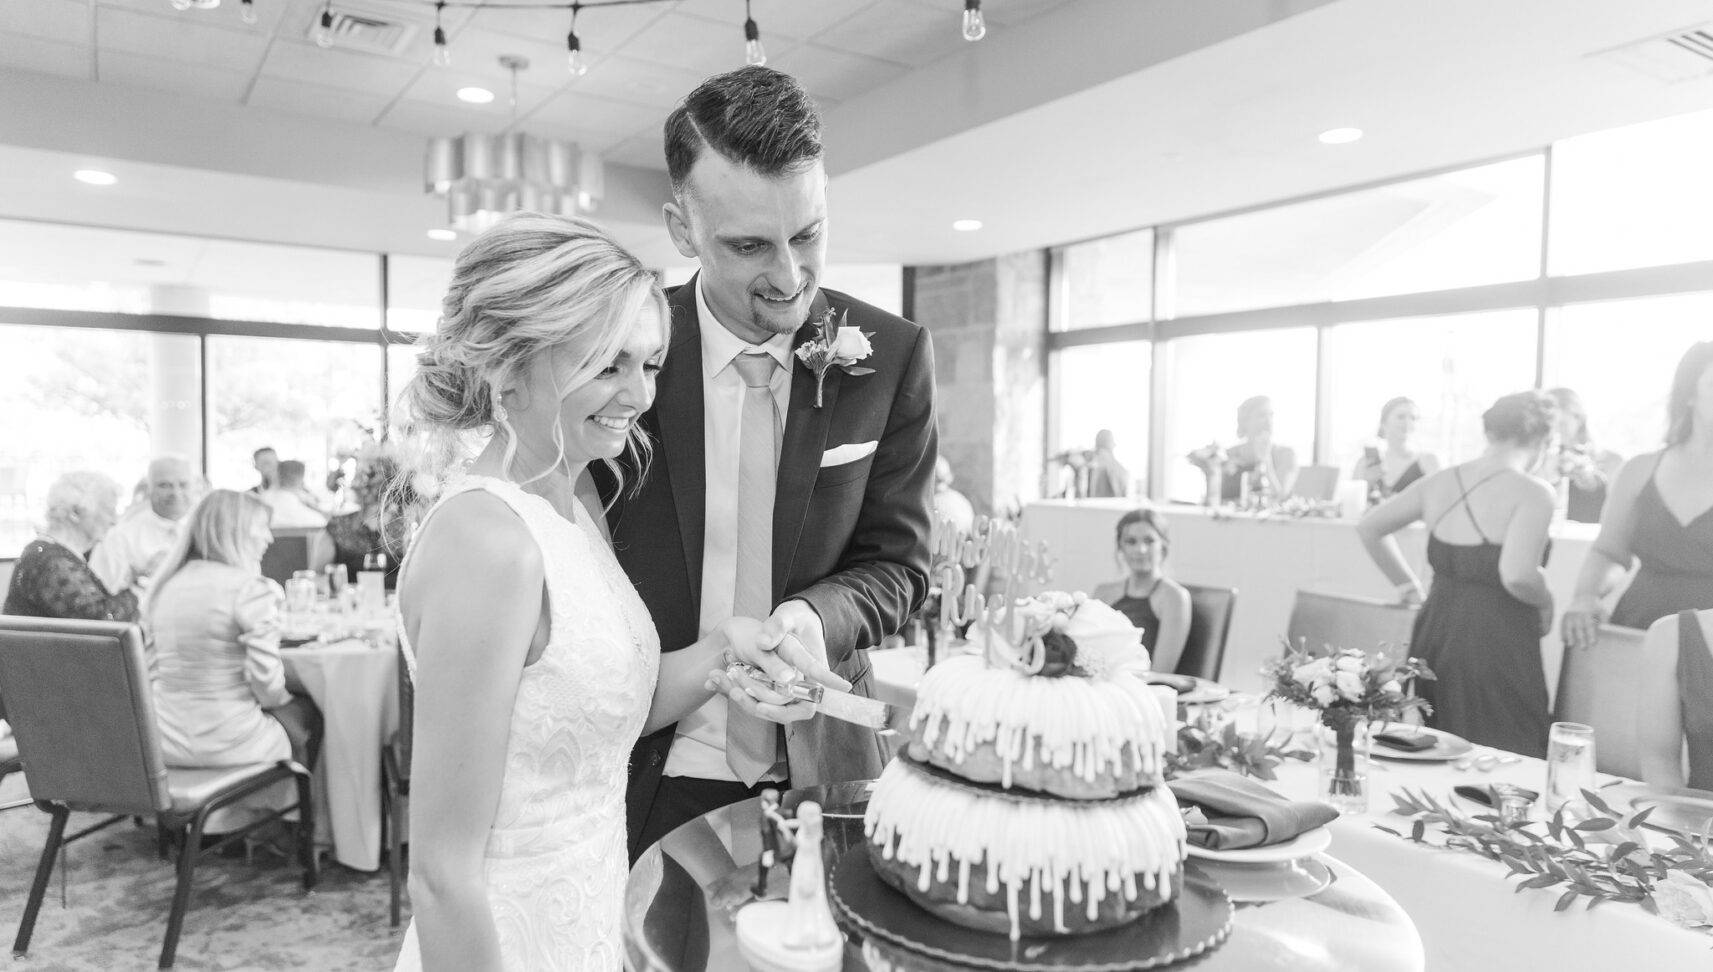 wedding couple cutting their Bundt wedding cake